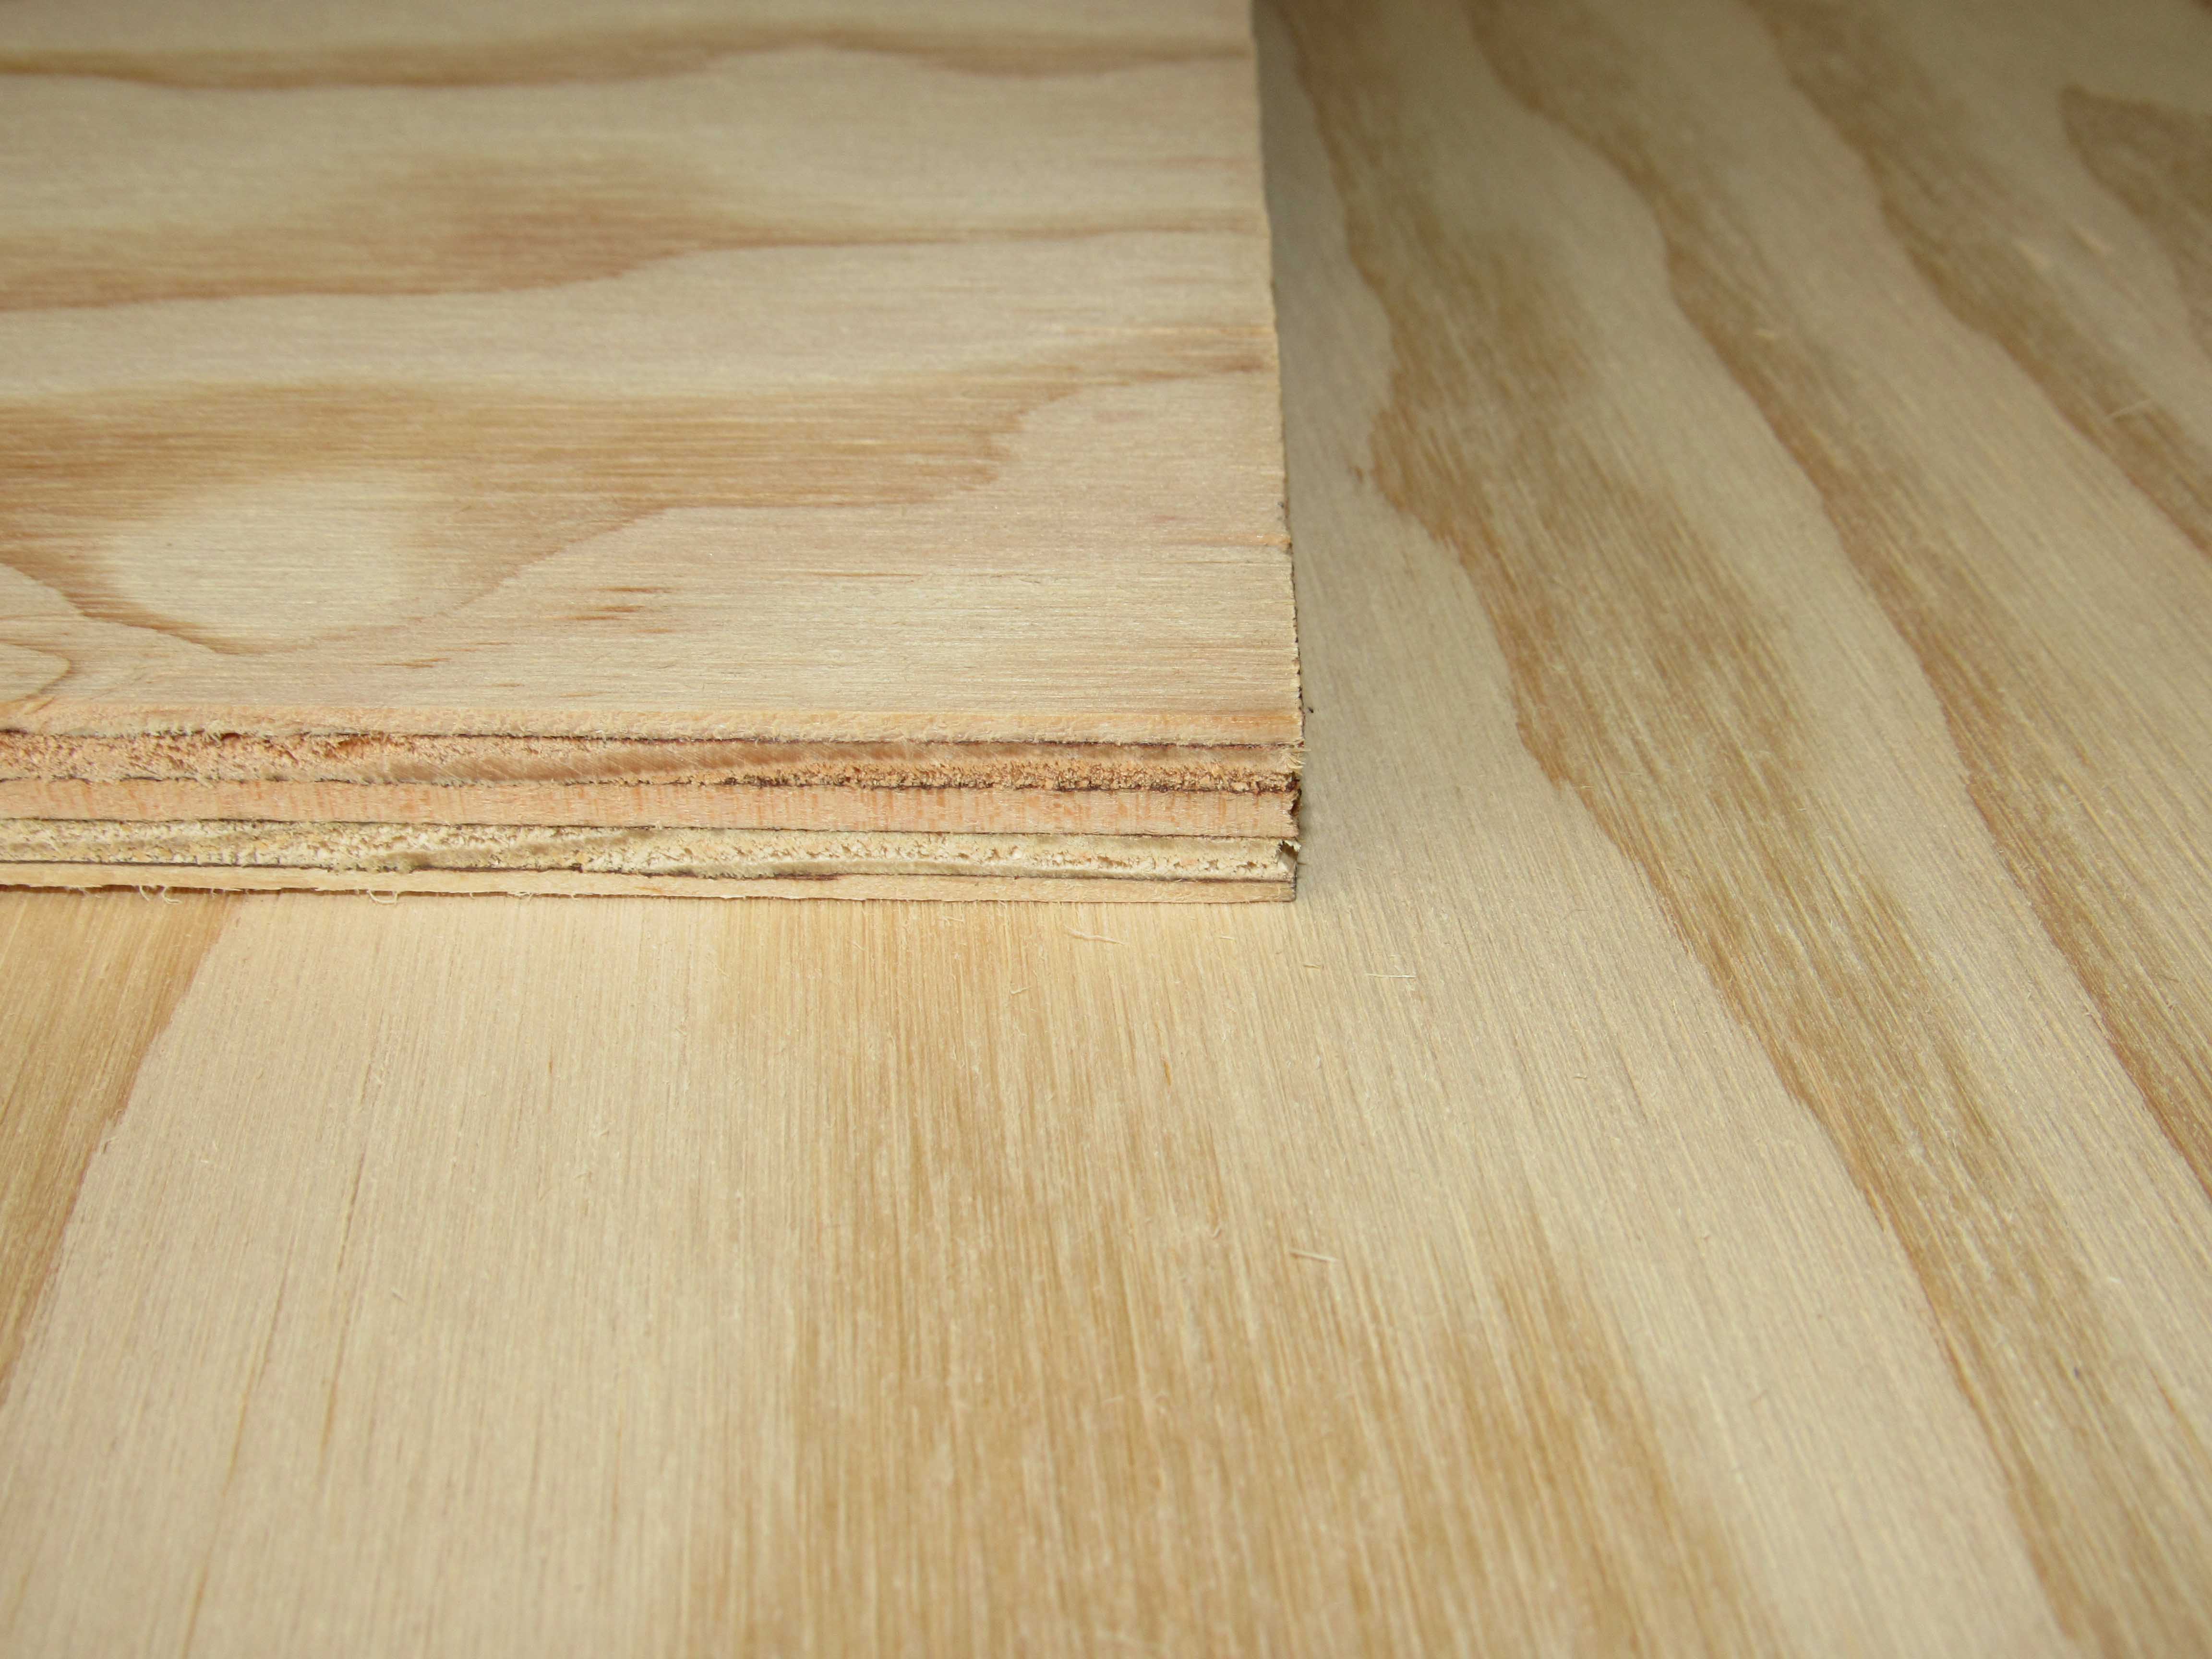 Ab Fir Marine Plywood Capitol City Lumber,Refinish Hardwood Floors Cost Diy